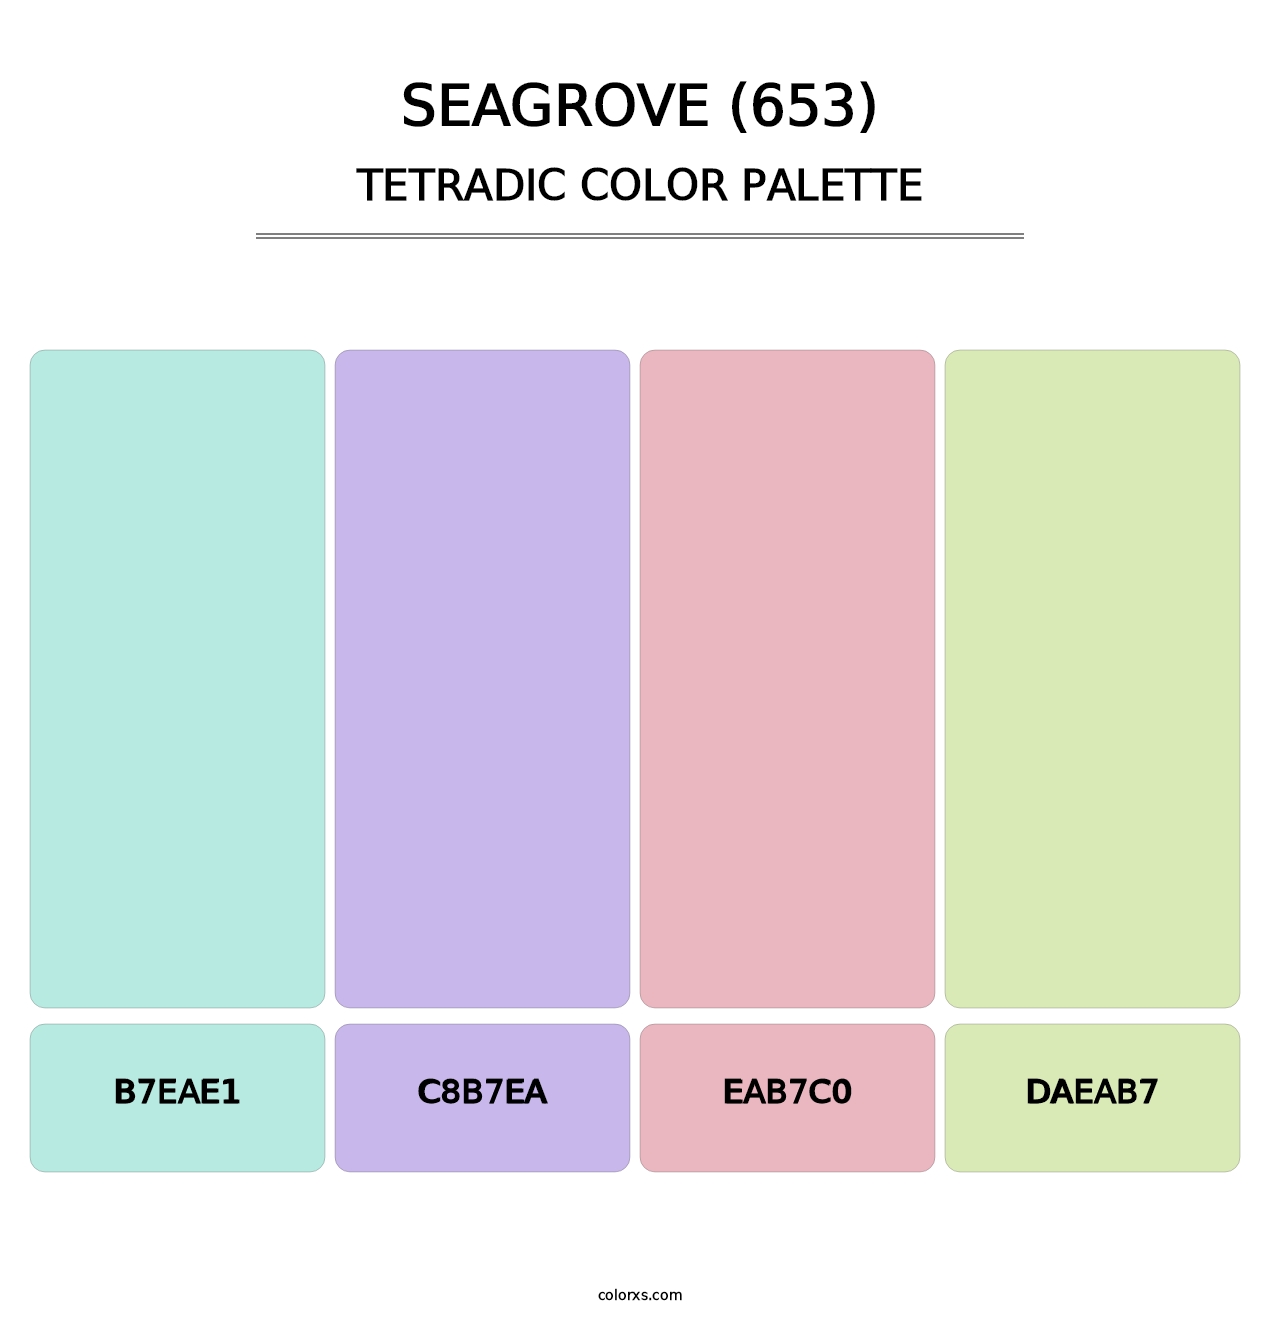 Seagrove (653) - Tetradic Color Palette